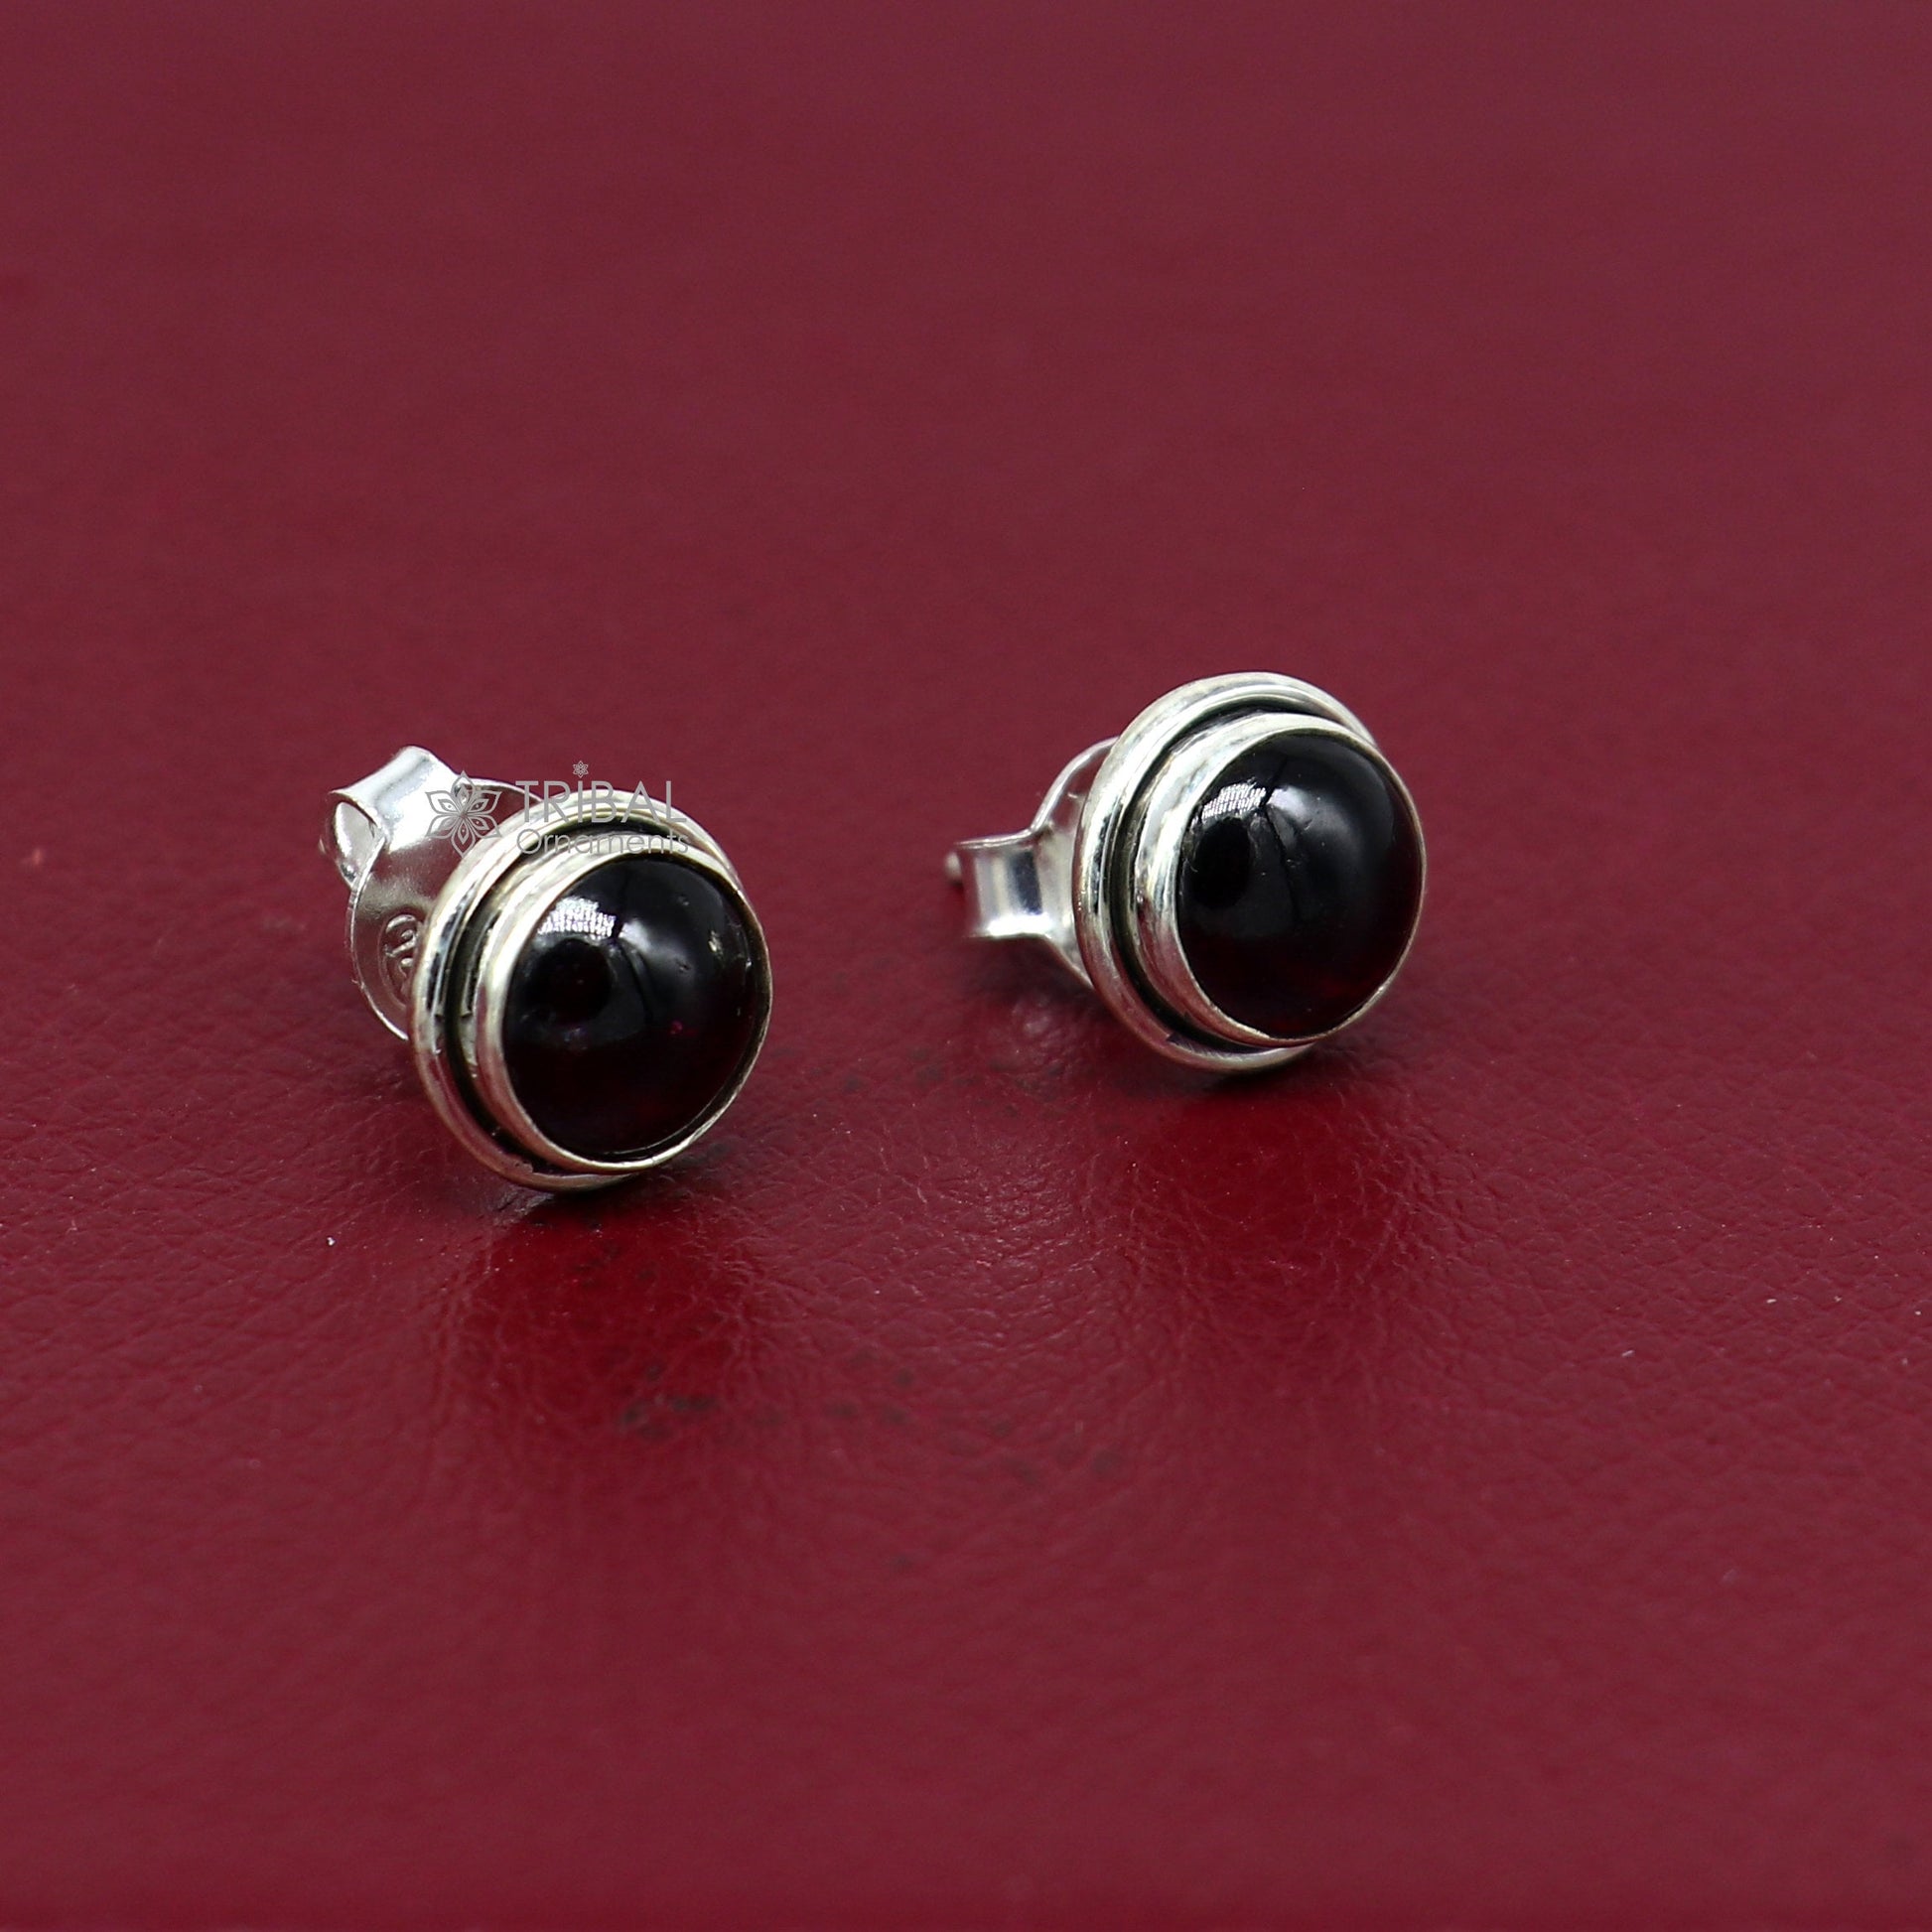 11MM round 925 sterling silver fabulous garnet stone stud earrings, best unisex jewelry fancy earrings daily use jewelry collection s1221 - TRIBAL ORNAMENTS